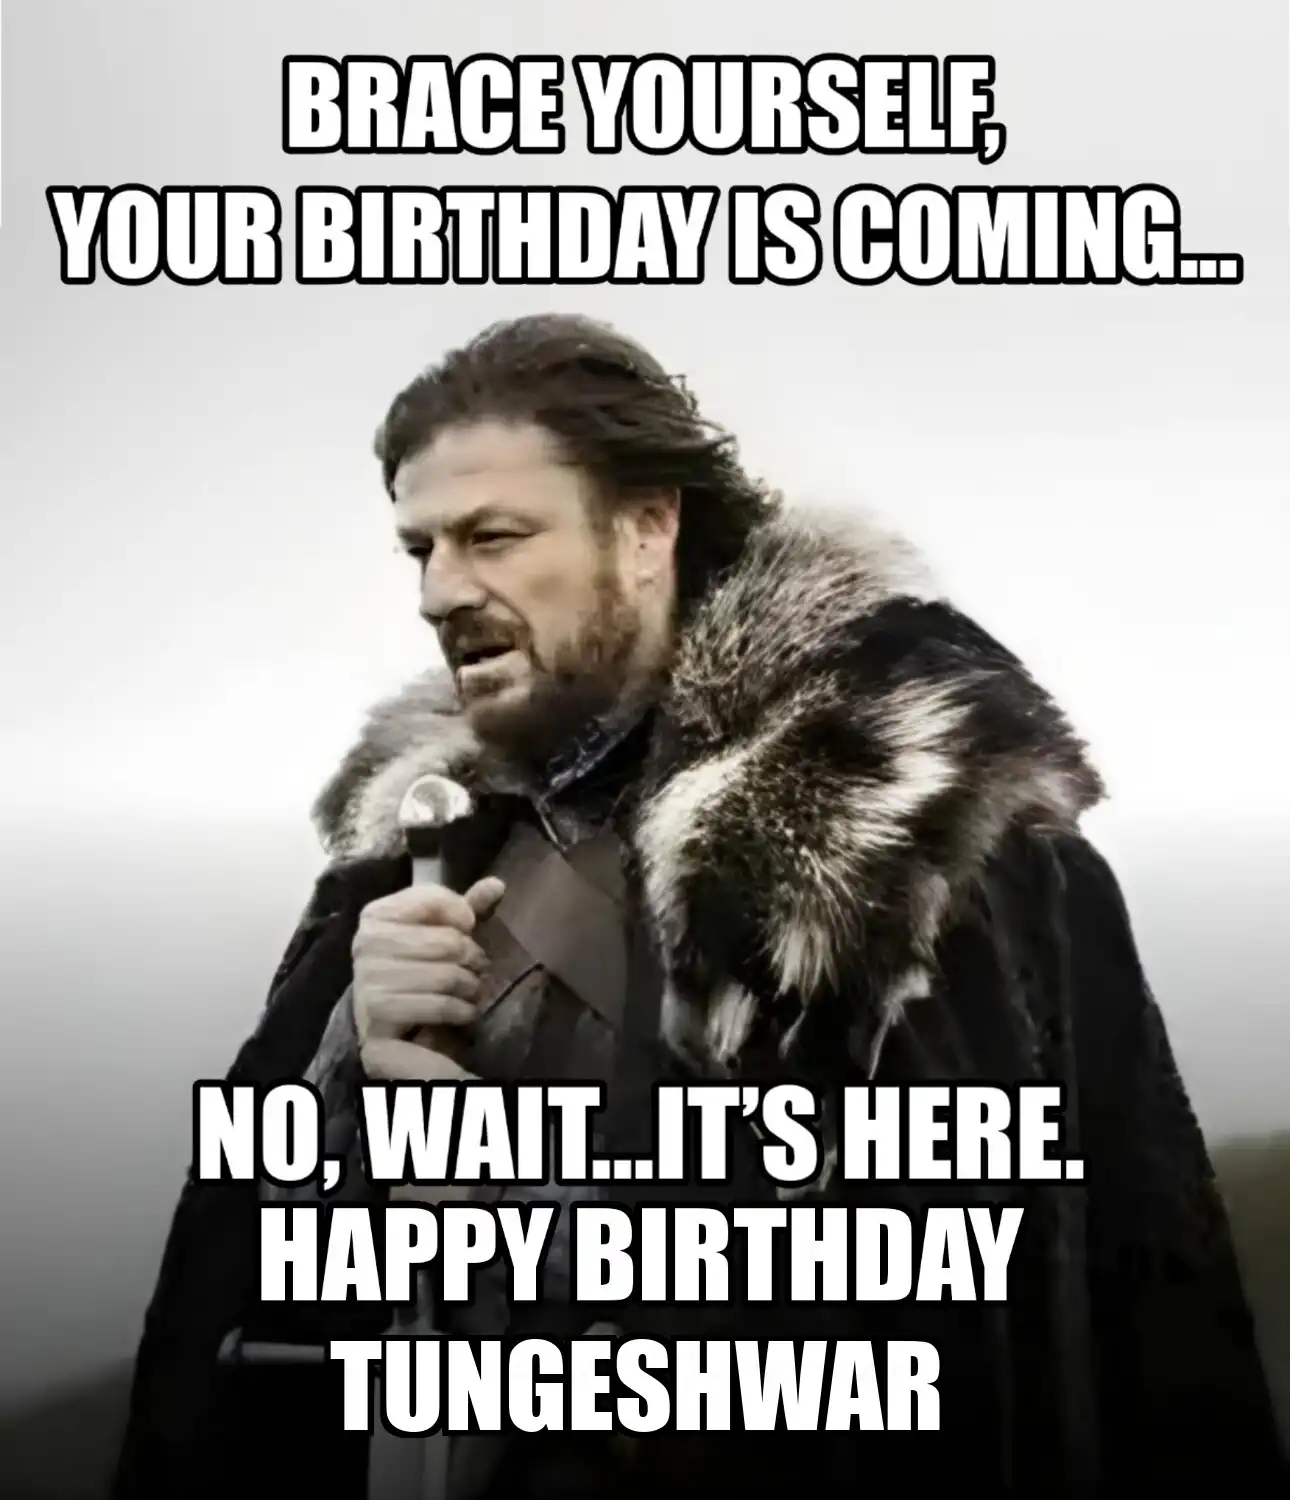 Happy Birthday Tungeshwar Brace Yourself Your Birthday Is Coming Meme